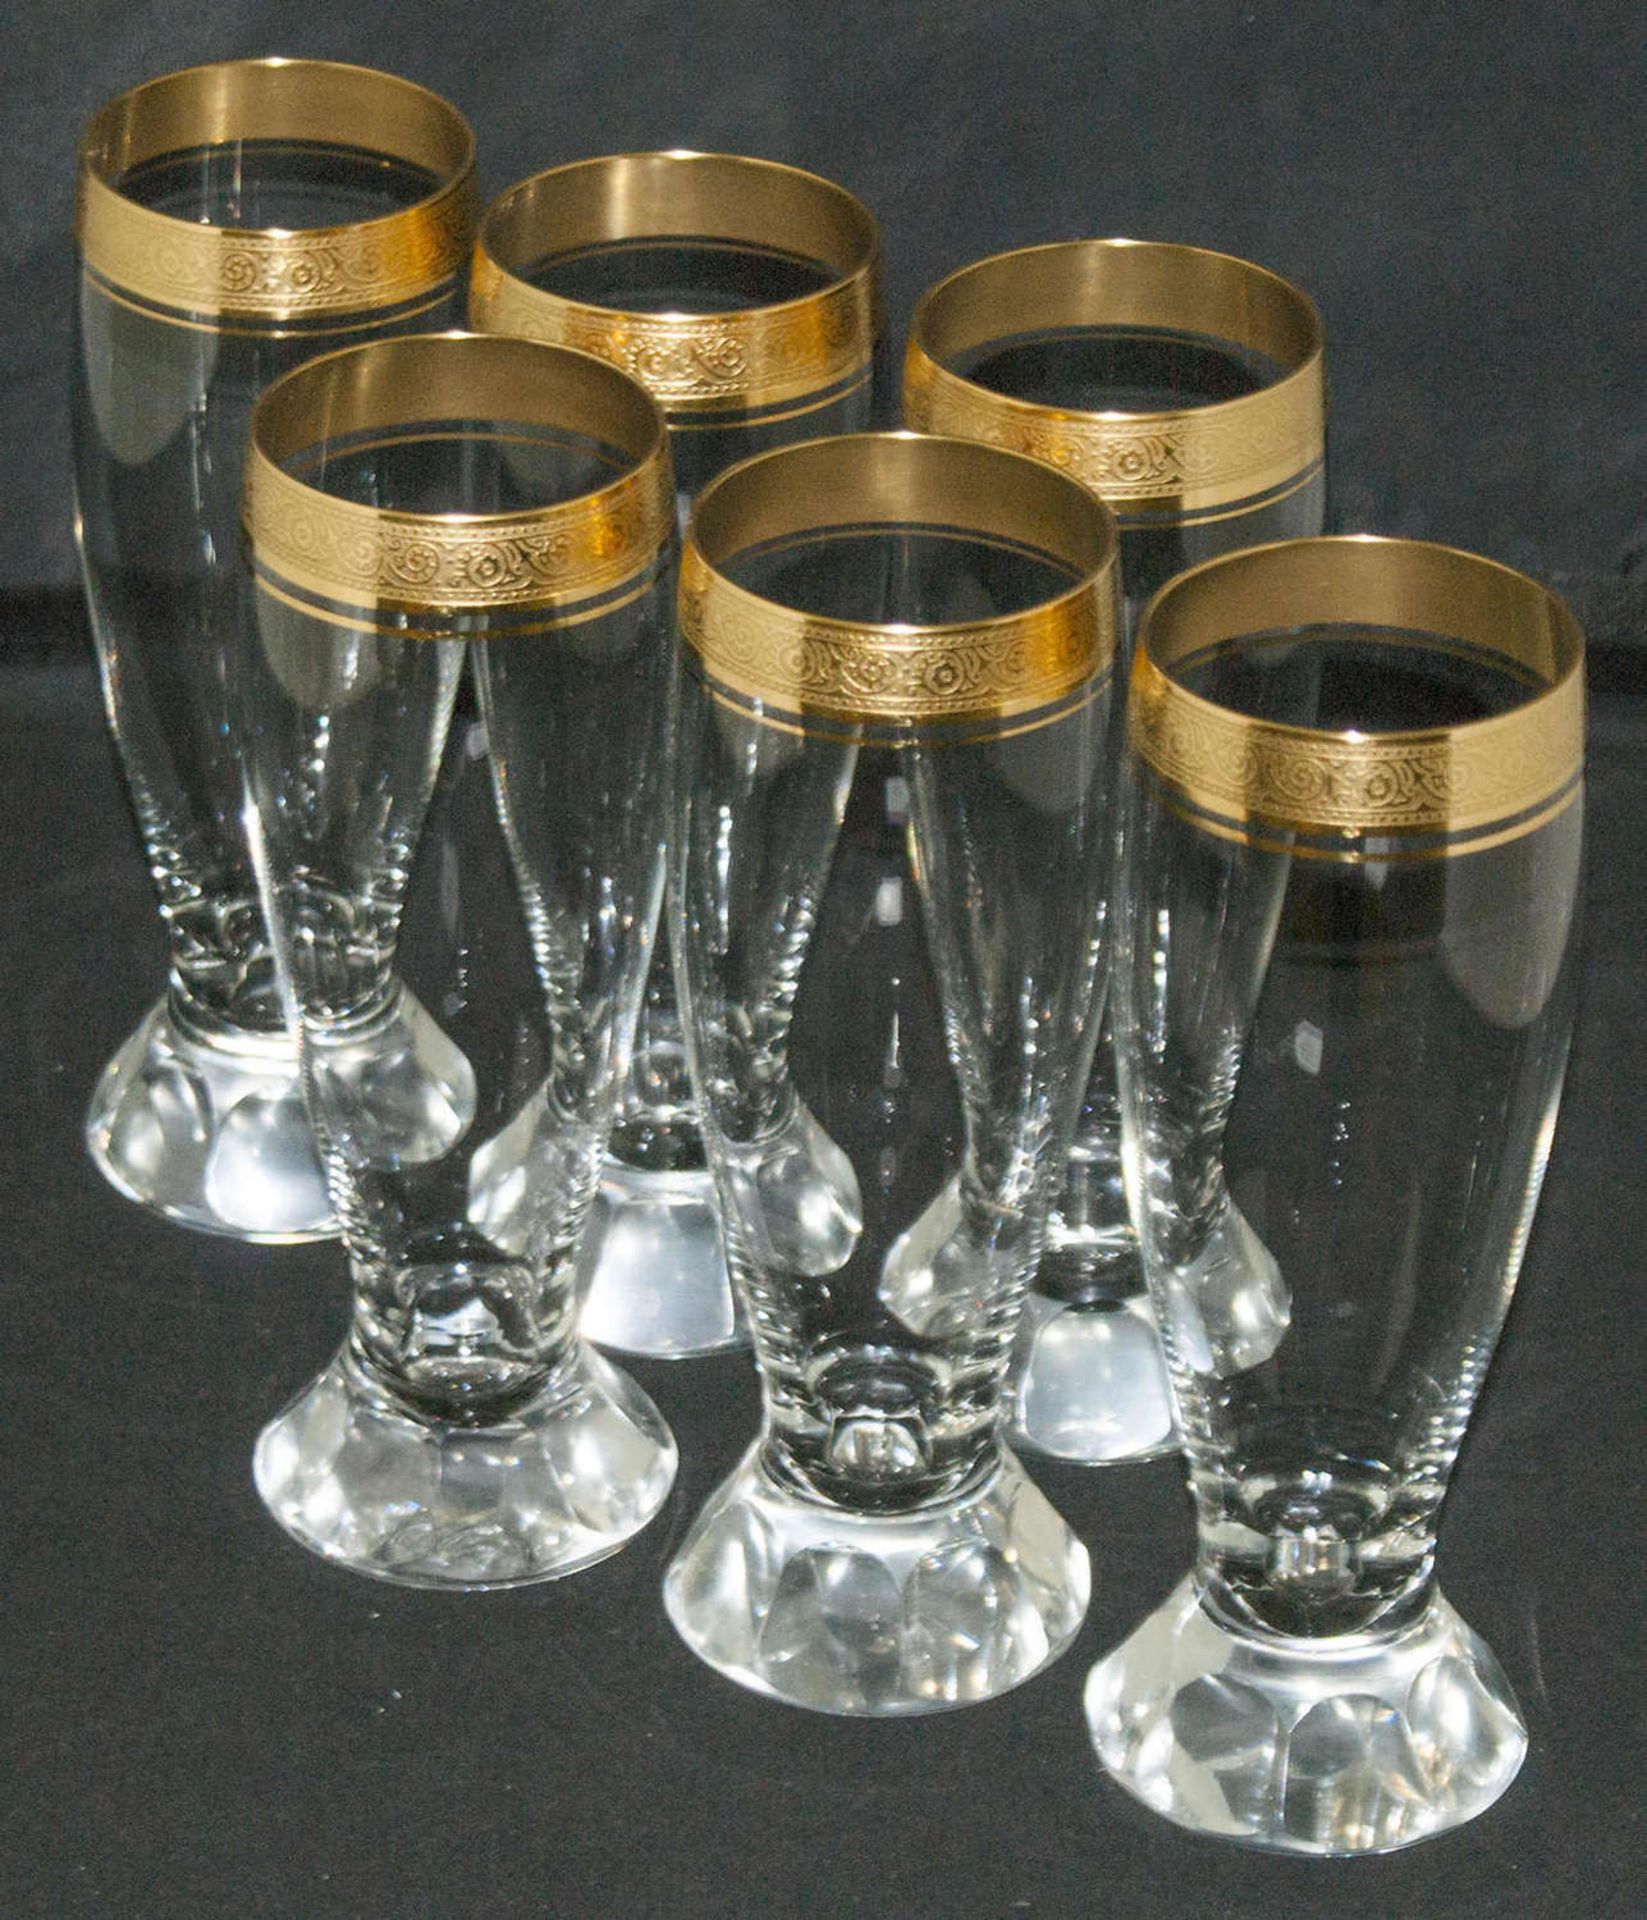 Theresienthal Conconde Mintonborde, Gläser Set mit Goldrelief. 6 Bier/Pils Gläser. Sehr guter